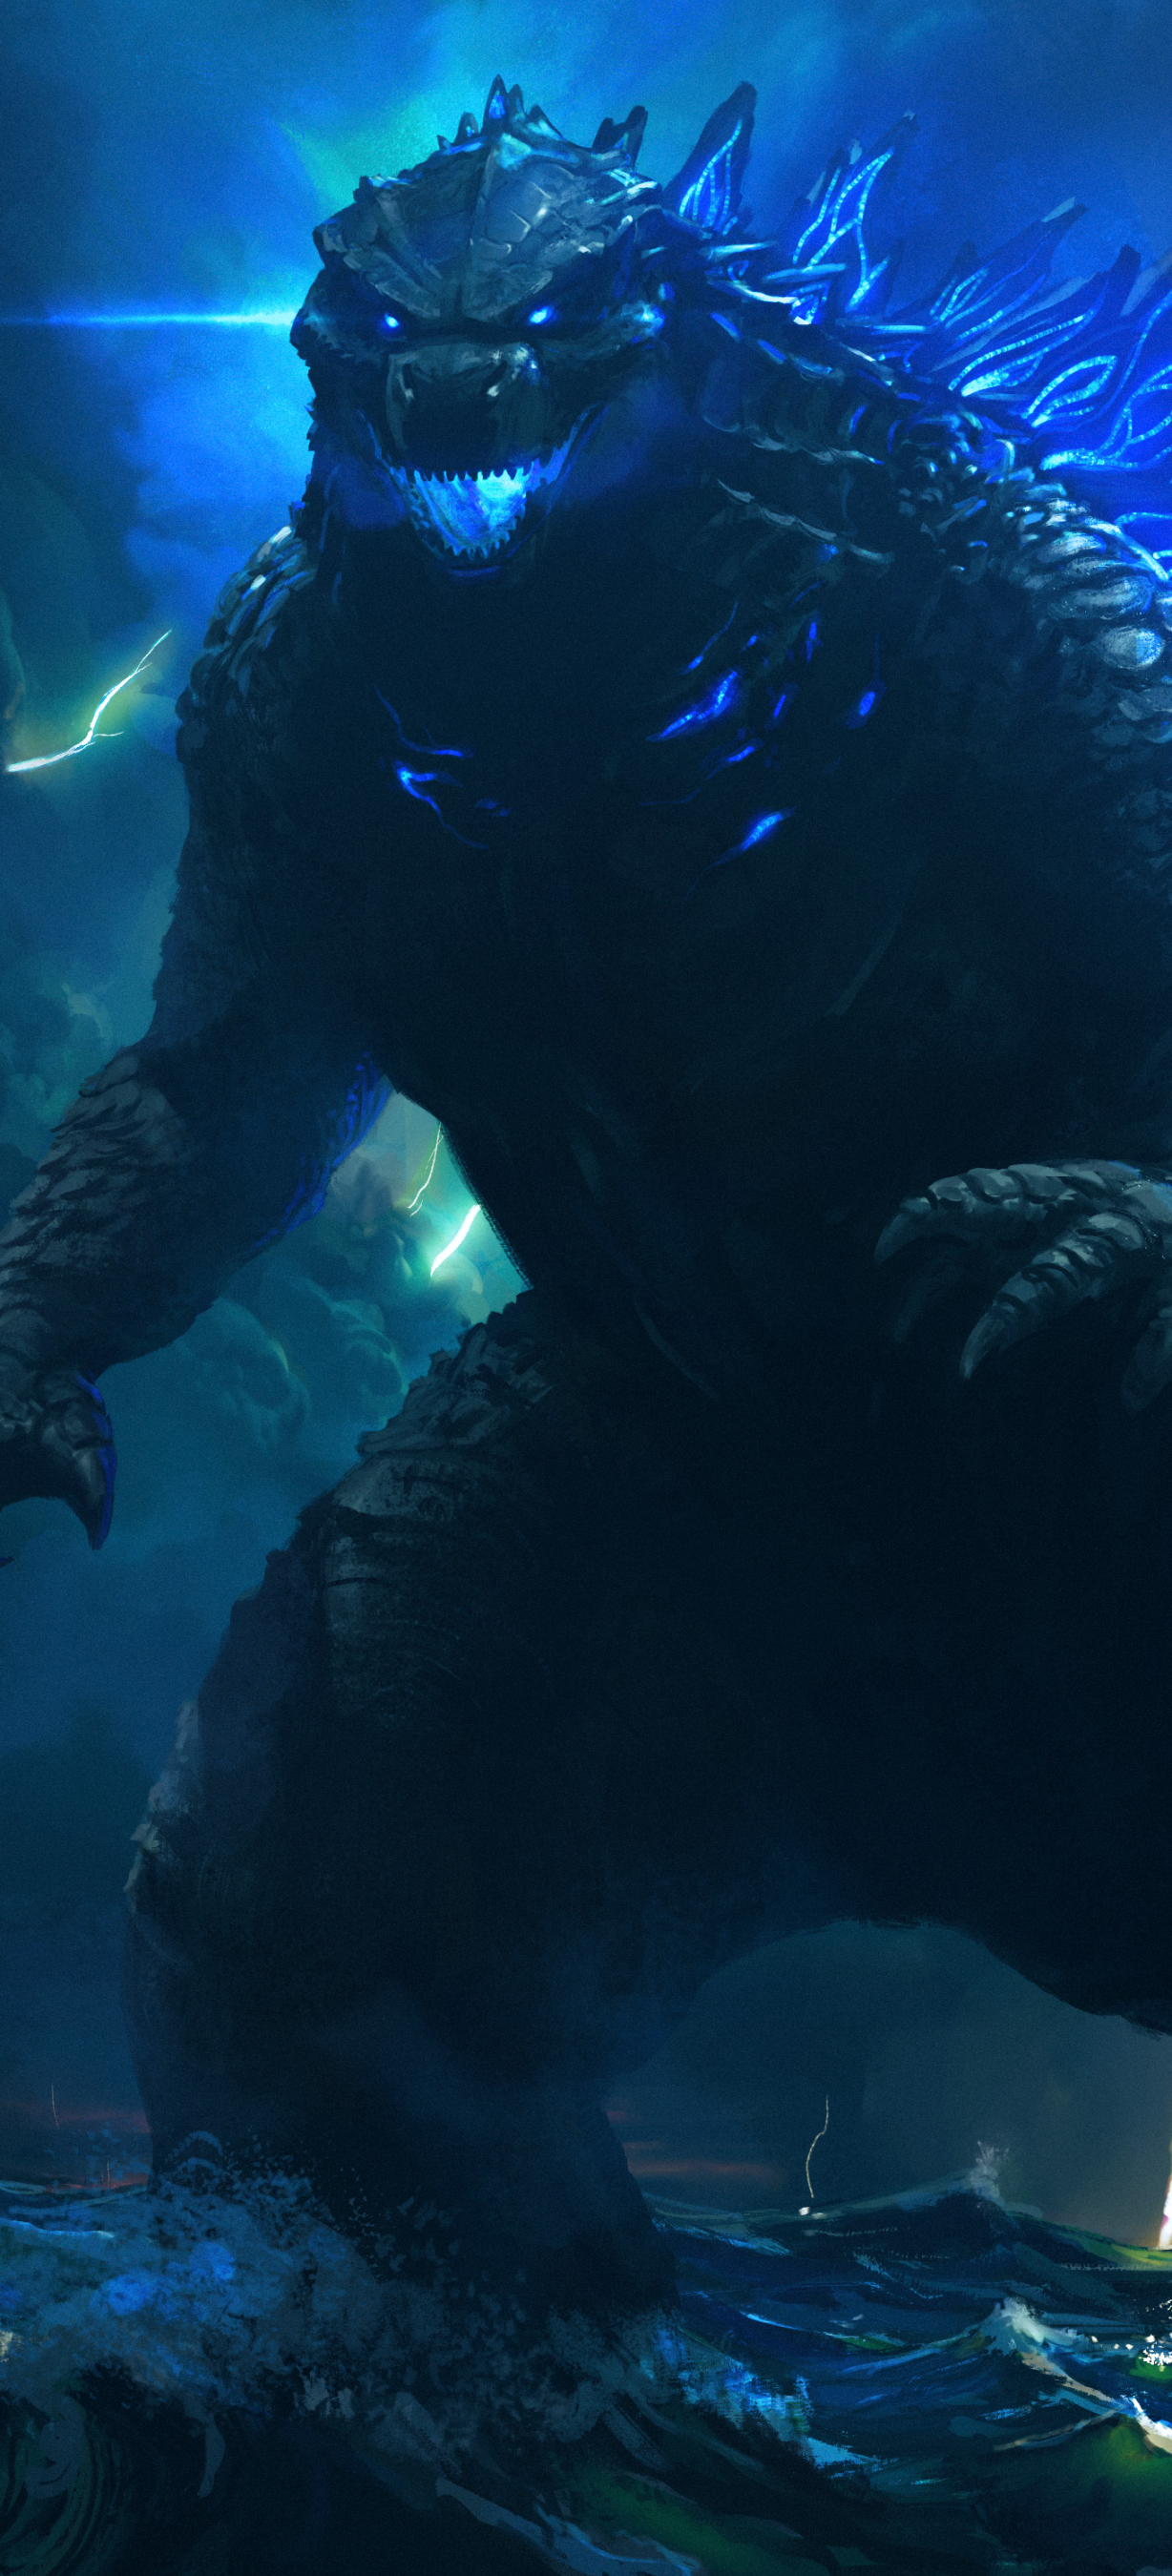 Descarga gratuita de fondo de pantalla para móvil de Fantasía, Godzilla, Godzilla (Monsterverso).